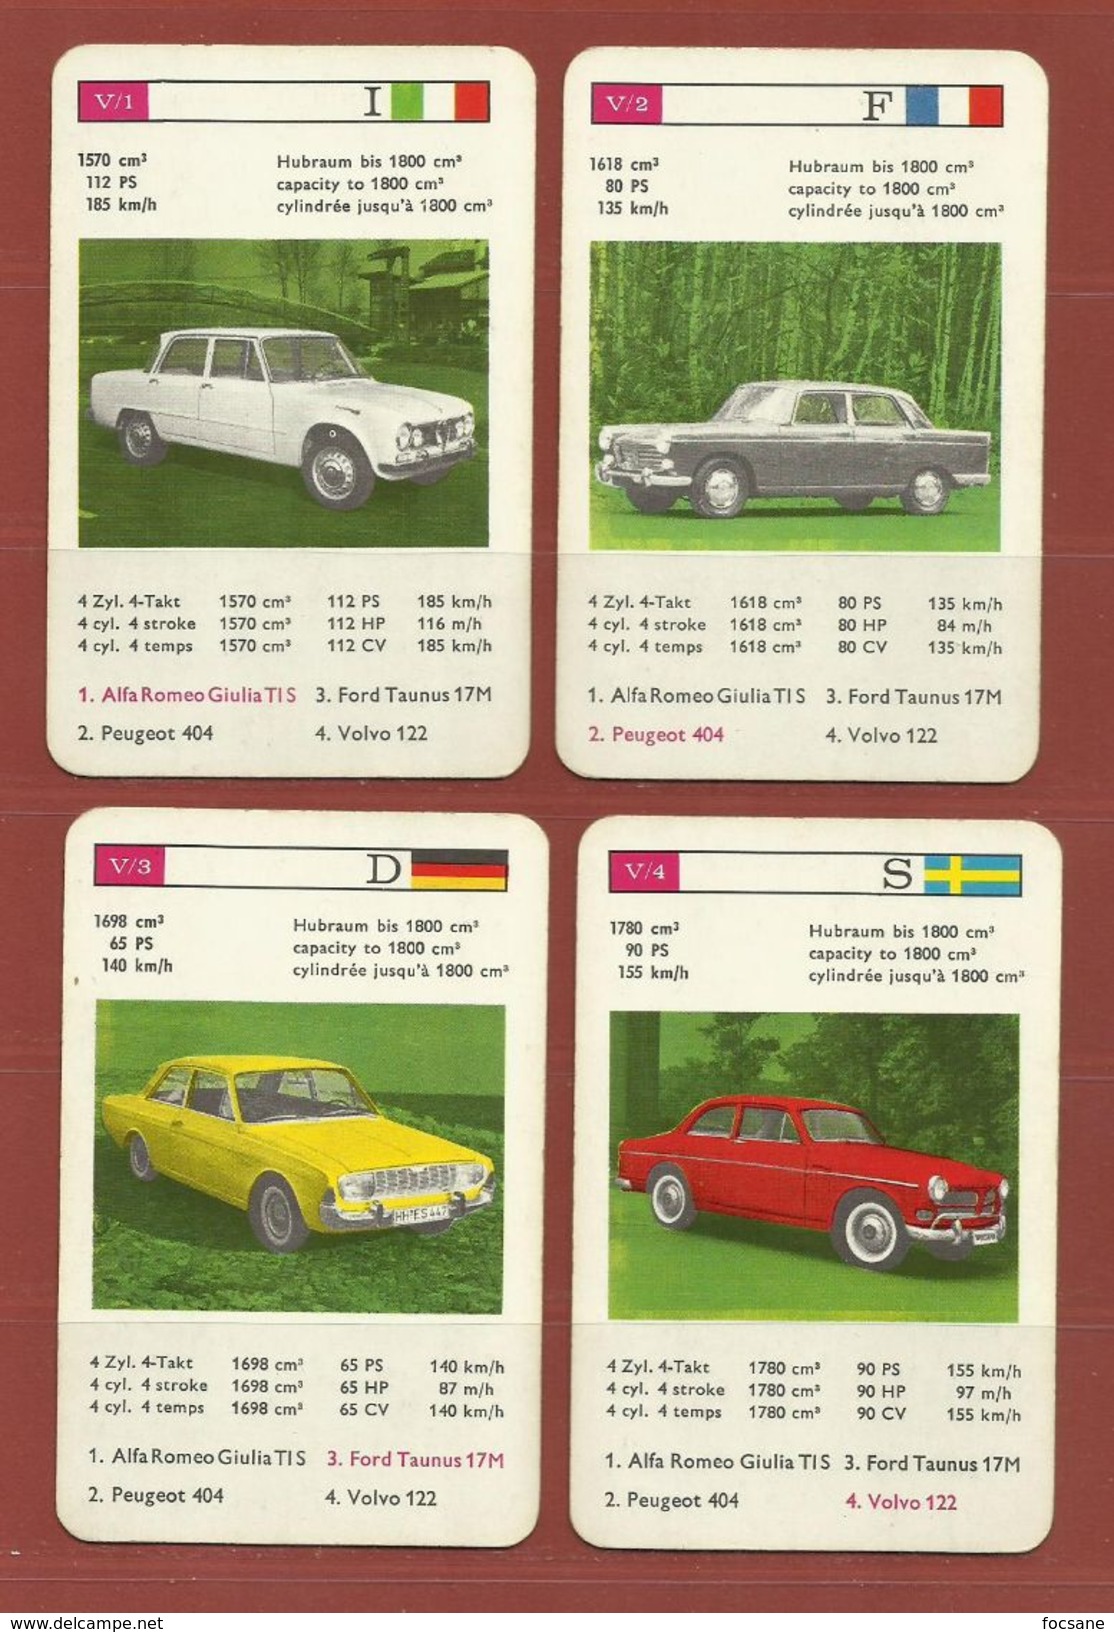 Jeu de cartes Autos année 1986